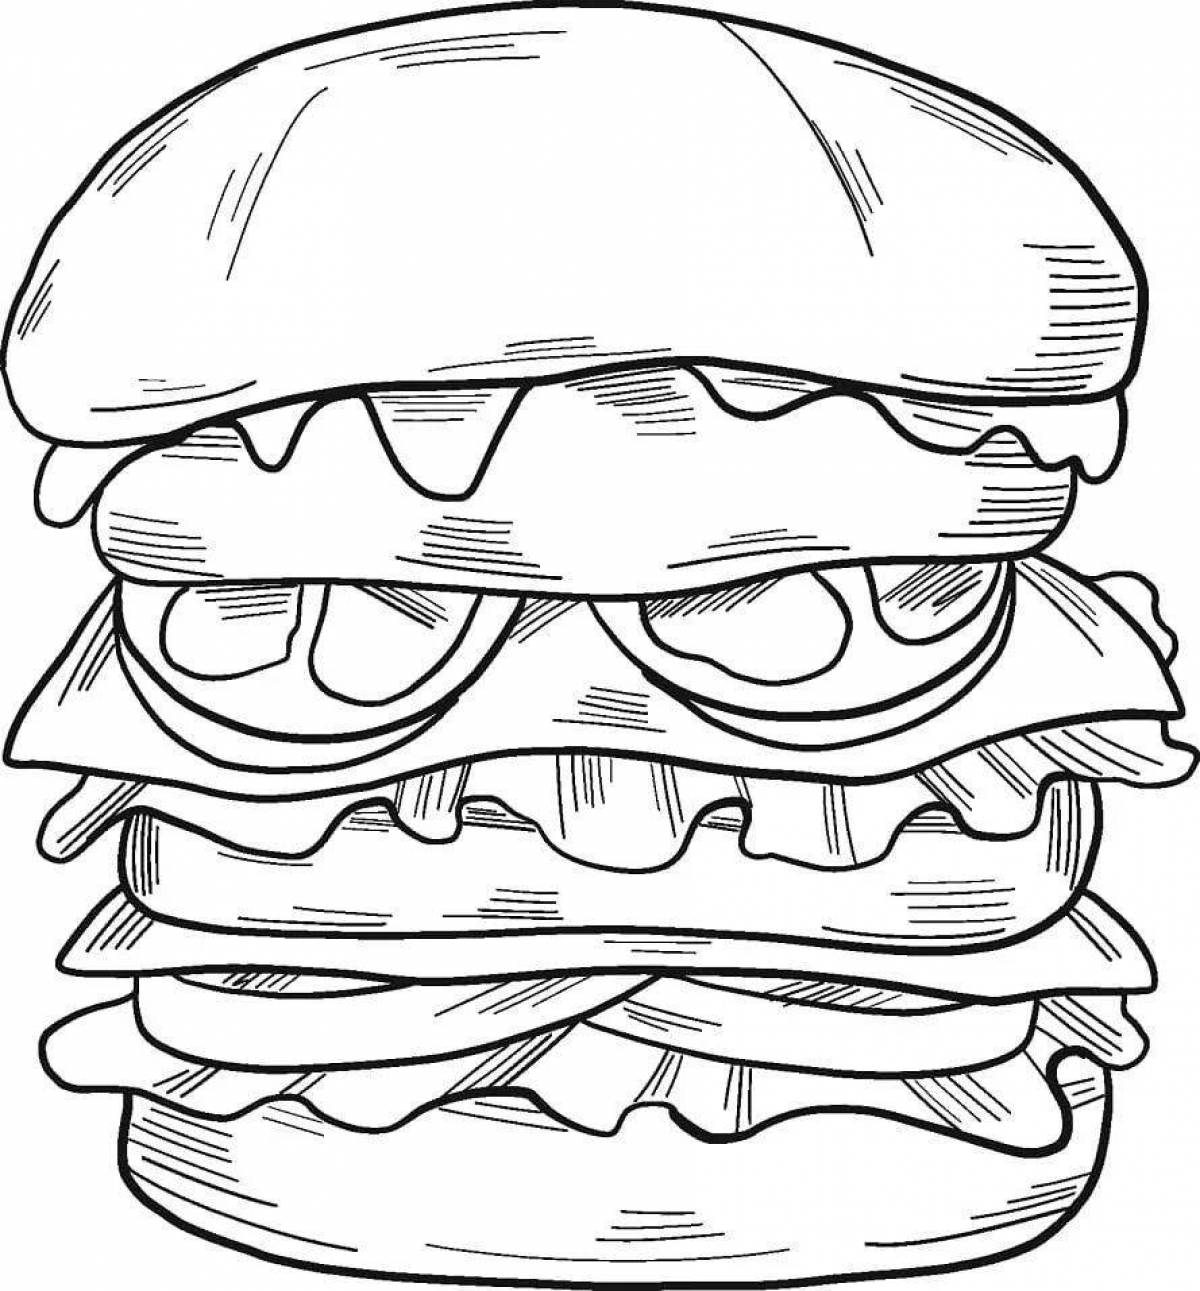 Coloring elegant burger king